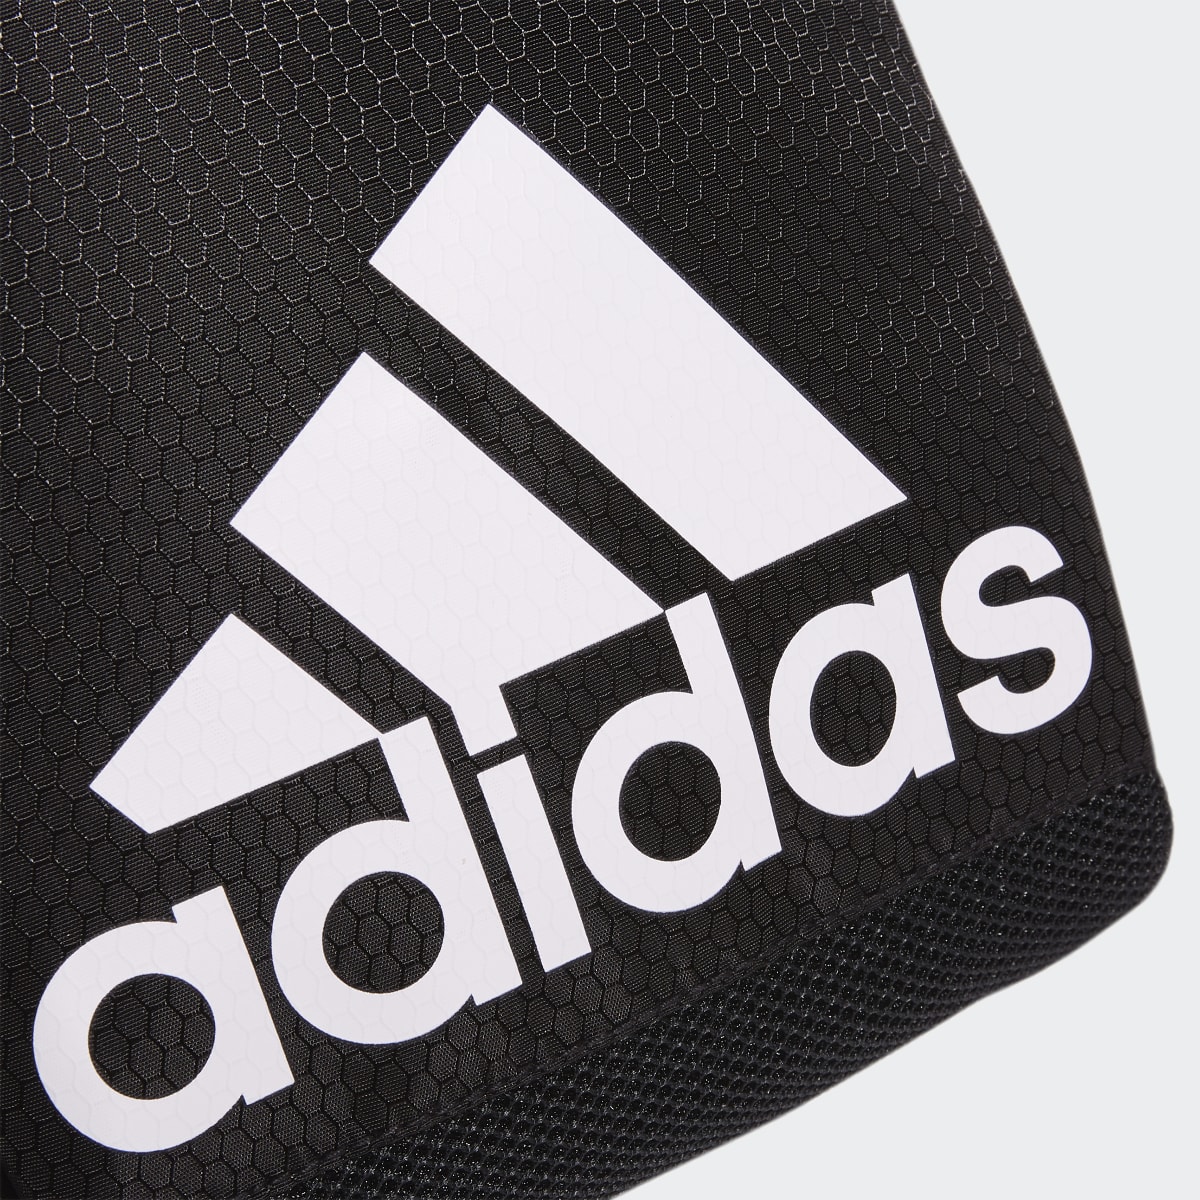 Adidas Stadium Team Glove Bag. 6